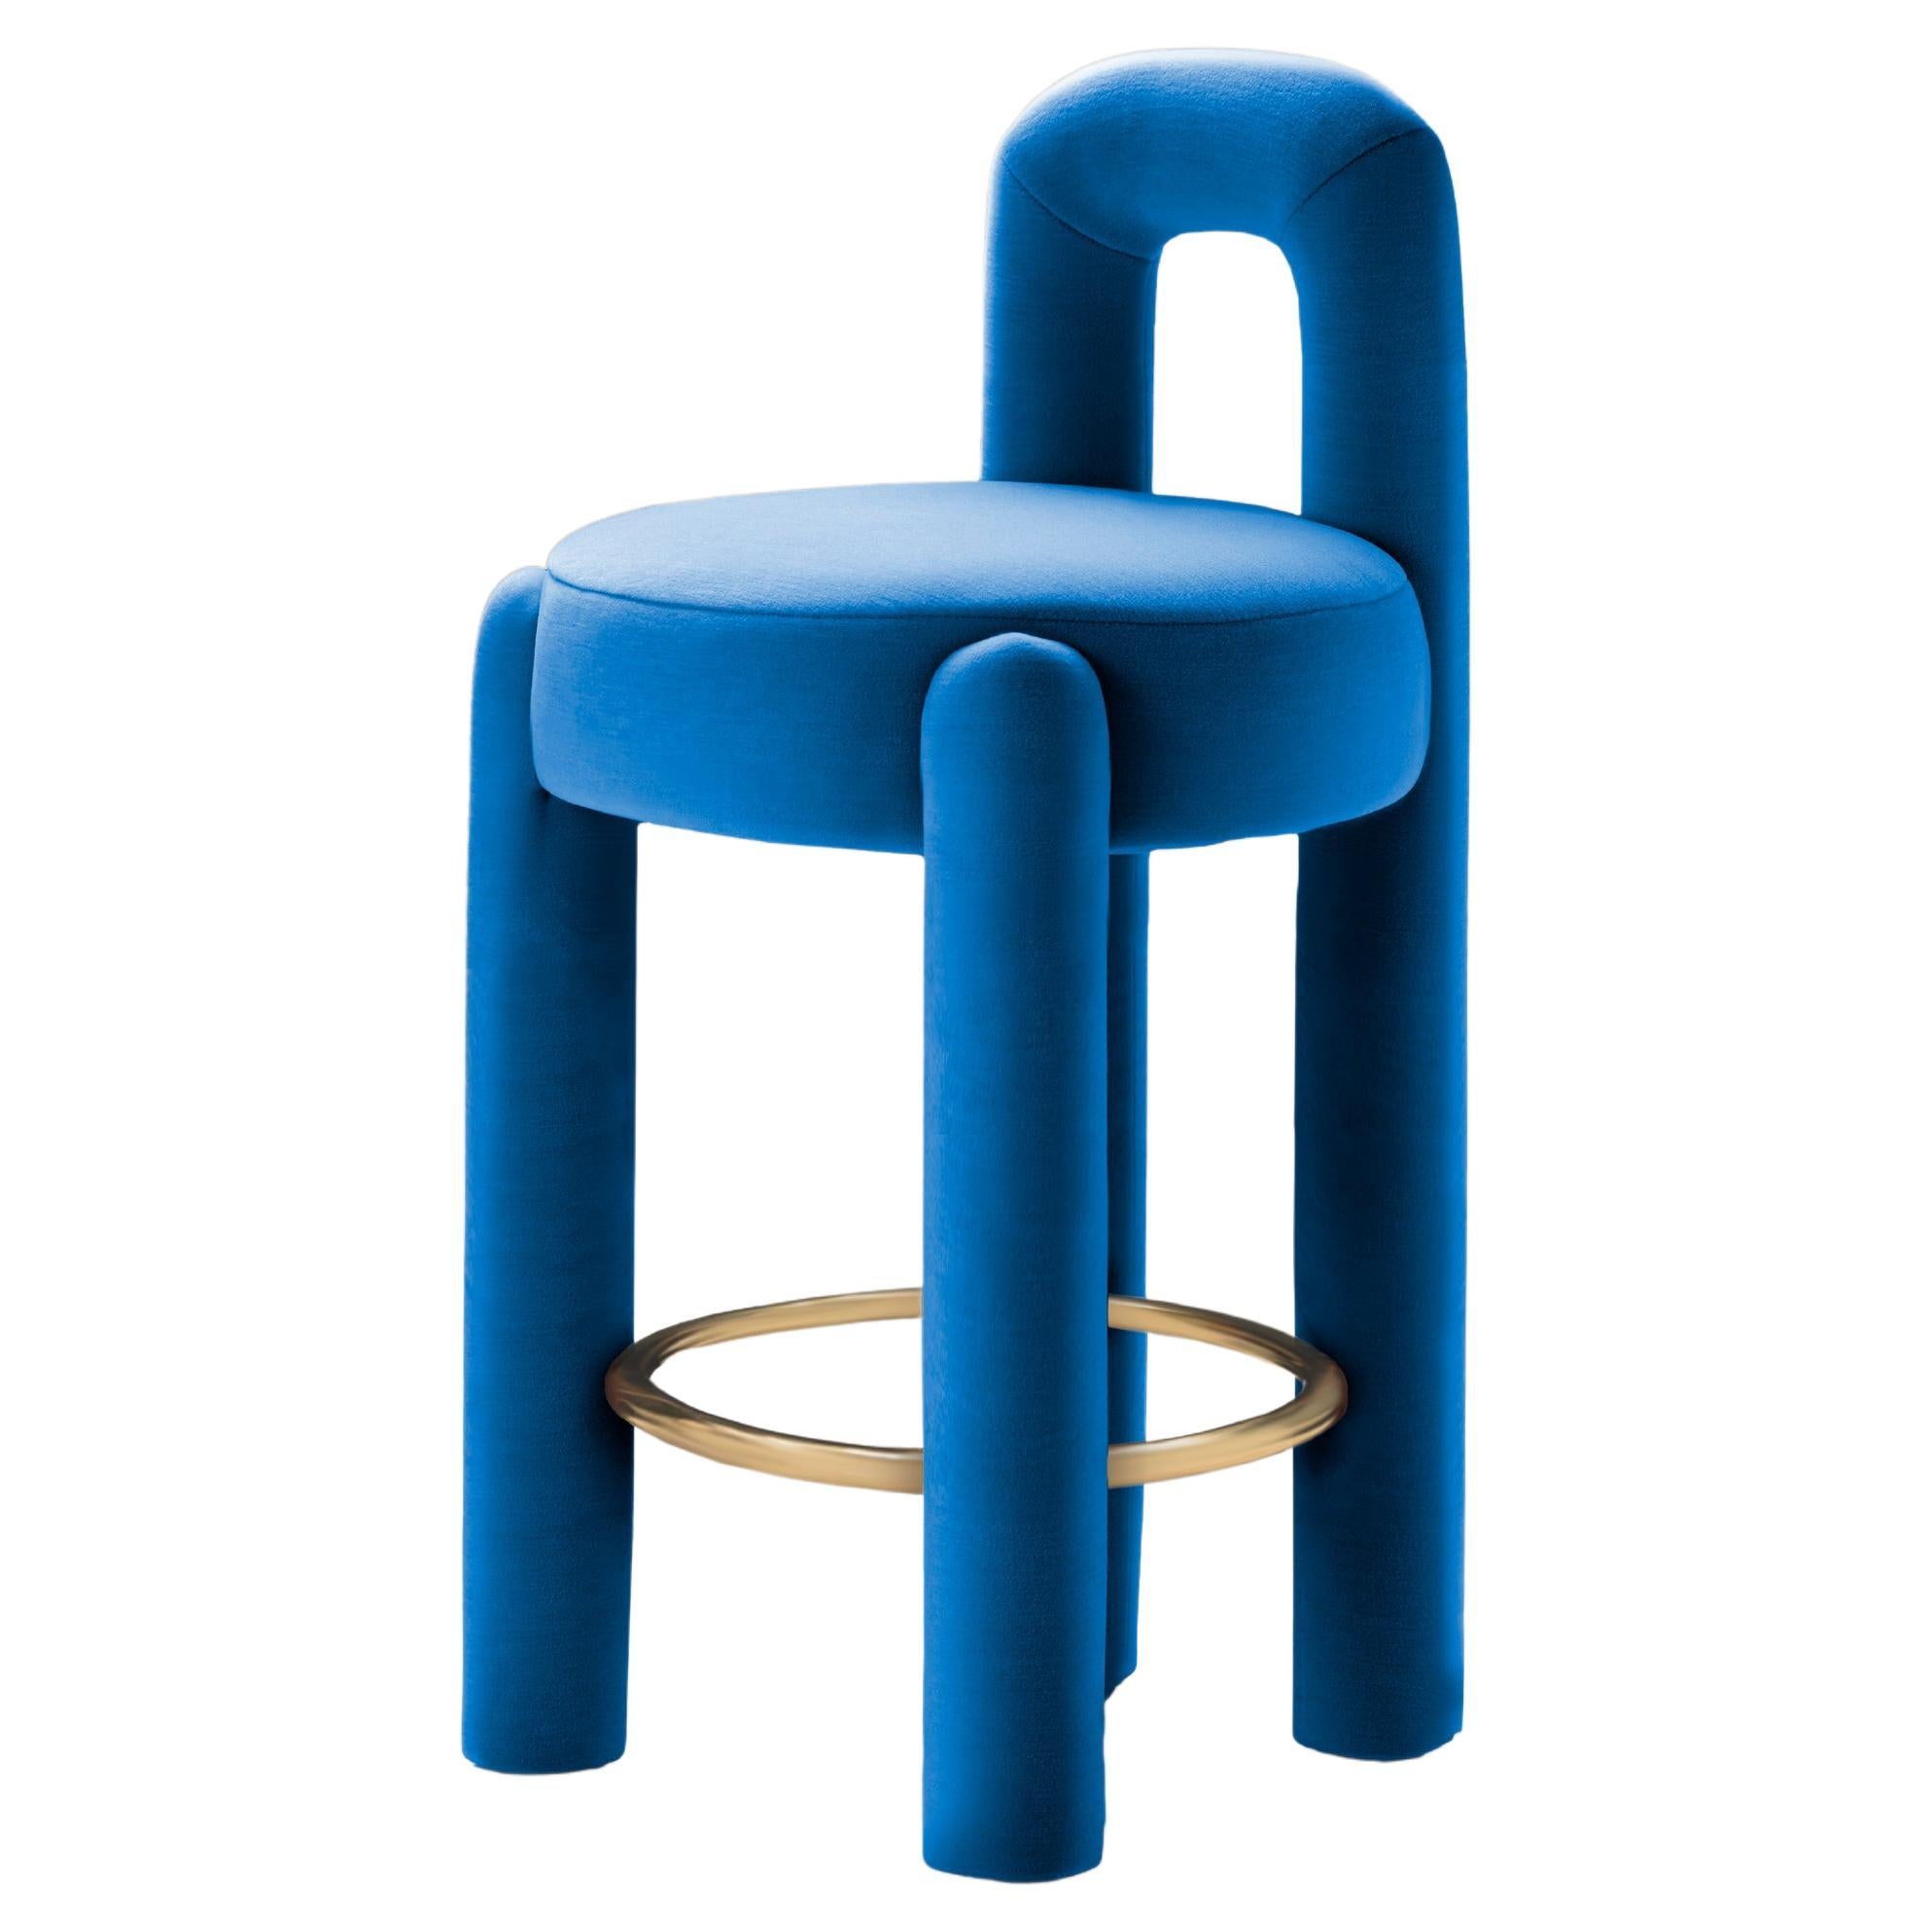 DOOQ! Organic Modern Marlon Counter Chair in Blau Kvadrat by P. Franceschini